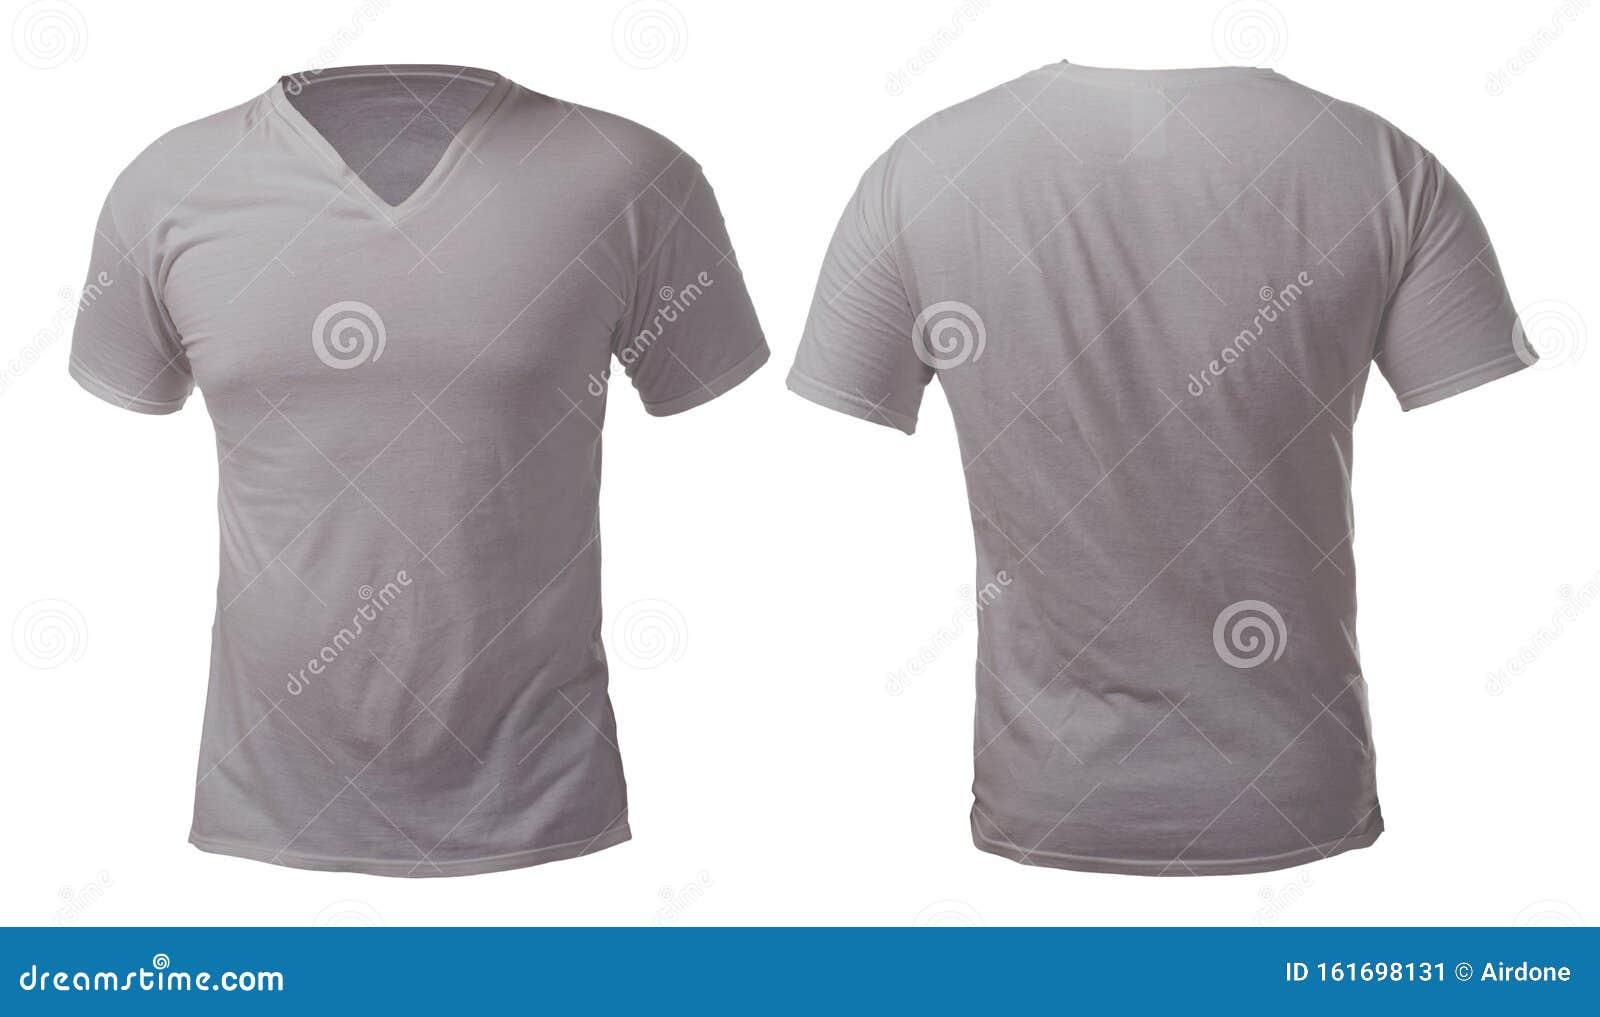 Grey V-Neck Shirt Design Template Stock Image - Image of cotton ...